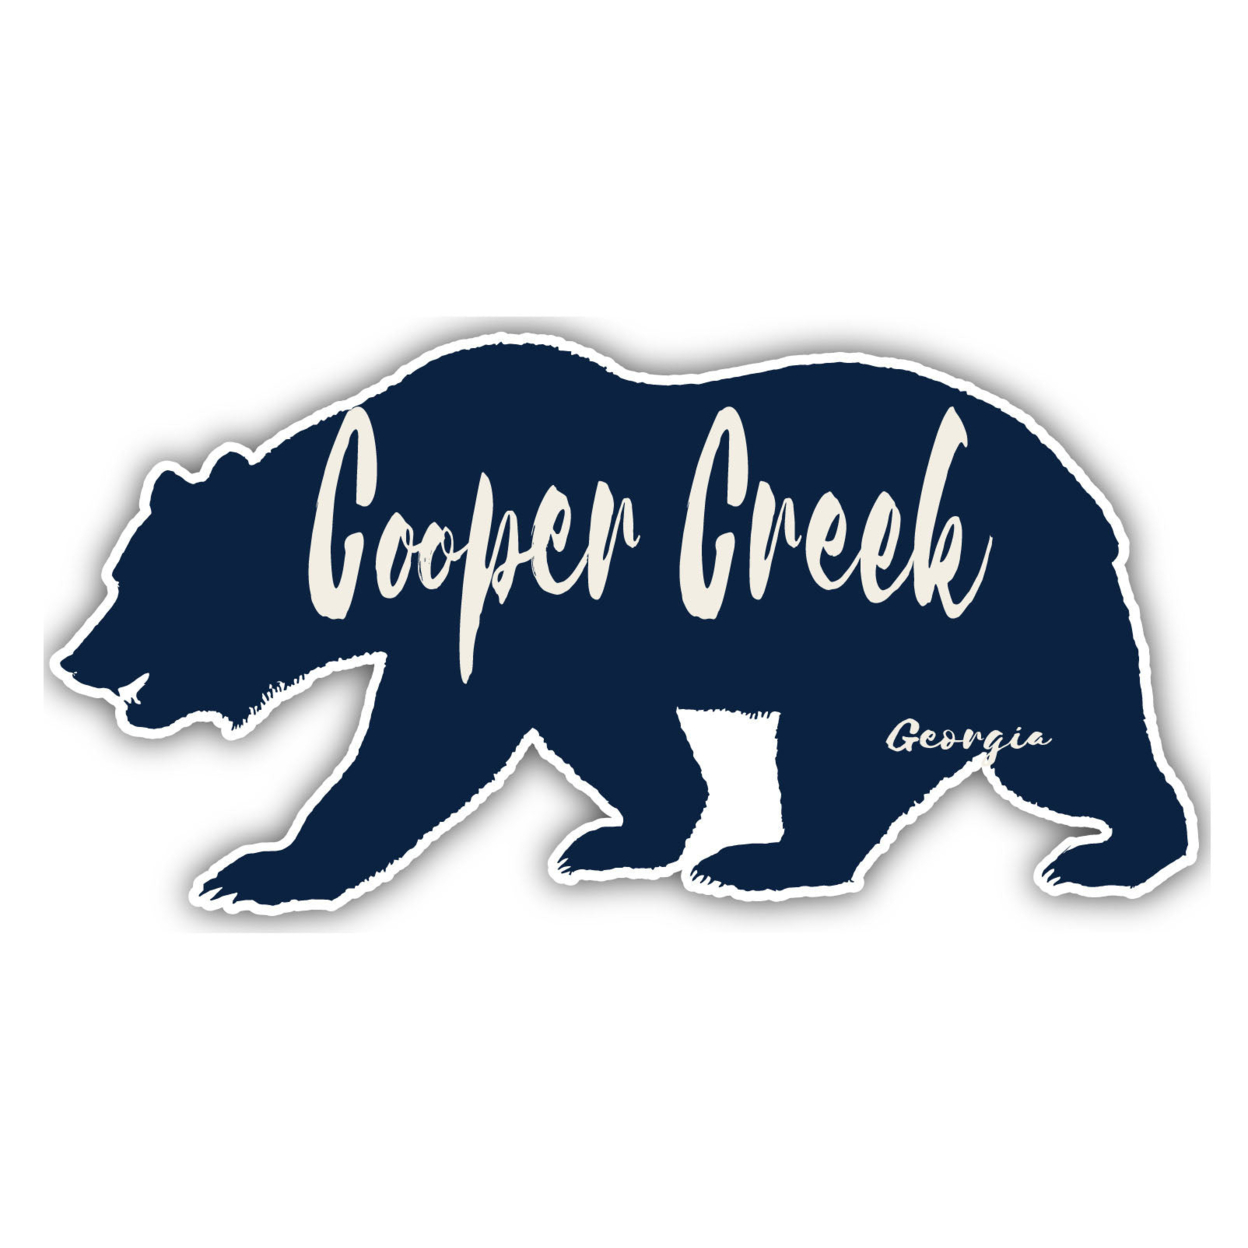 Cooper Creek Georgia Souvenir Decorative Stickers (Choose Theme And Size) - Single Unit, 12-Inch, Bear